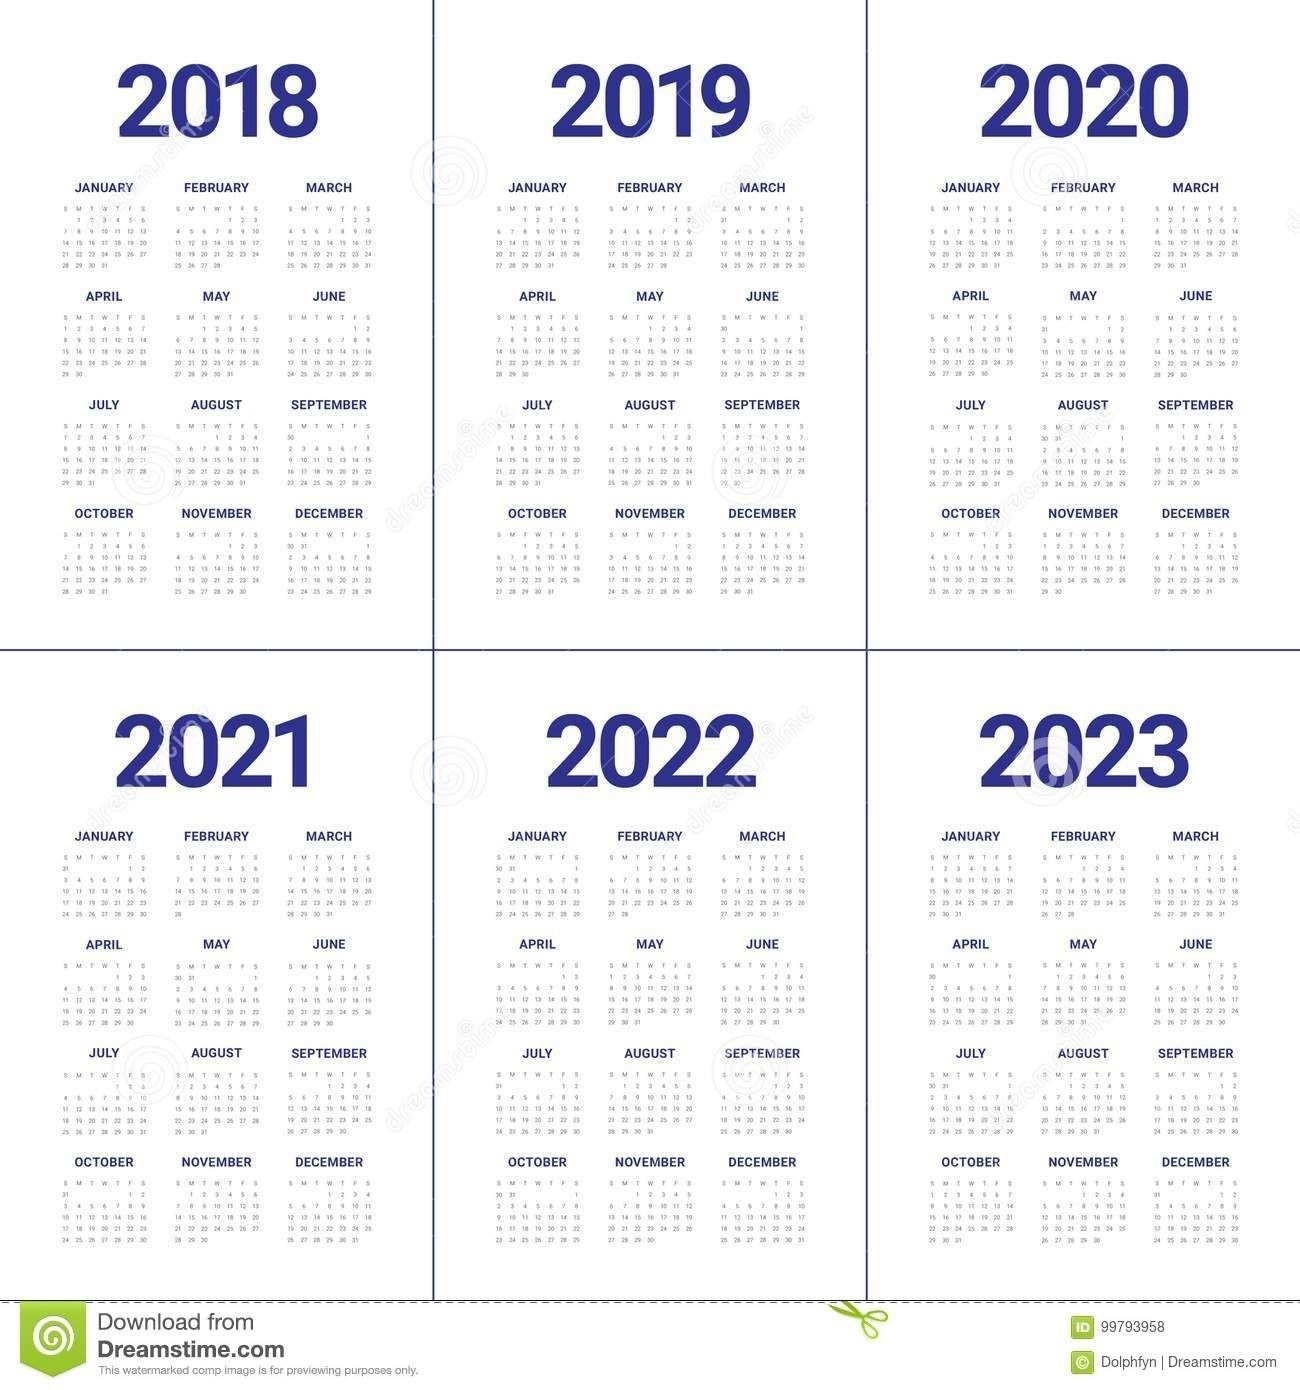 Print 2019, 2020, 2021, 2022, 2023, Calender - Calendar